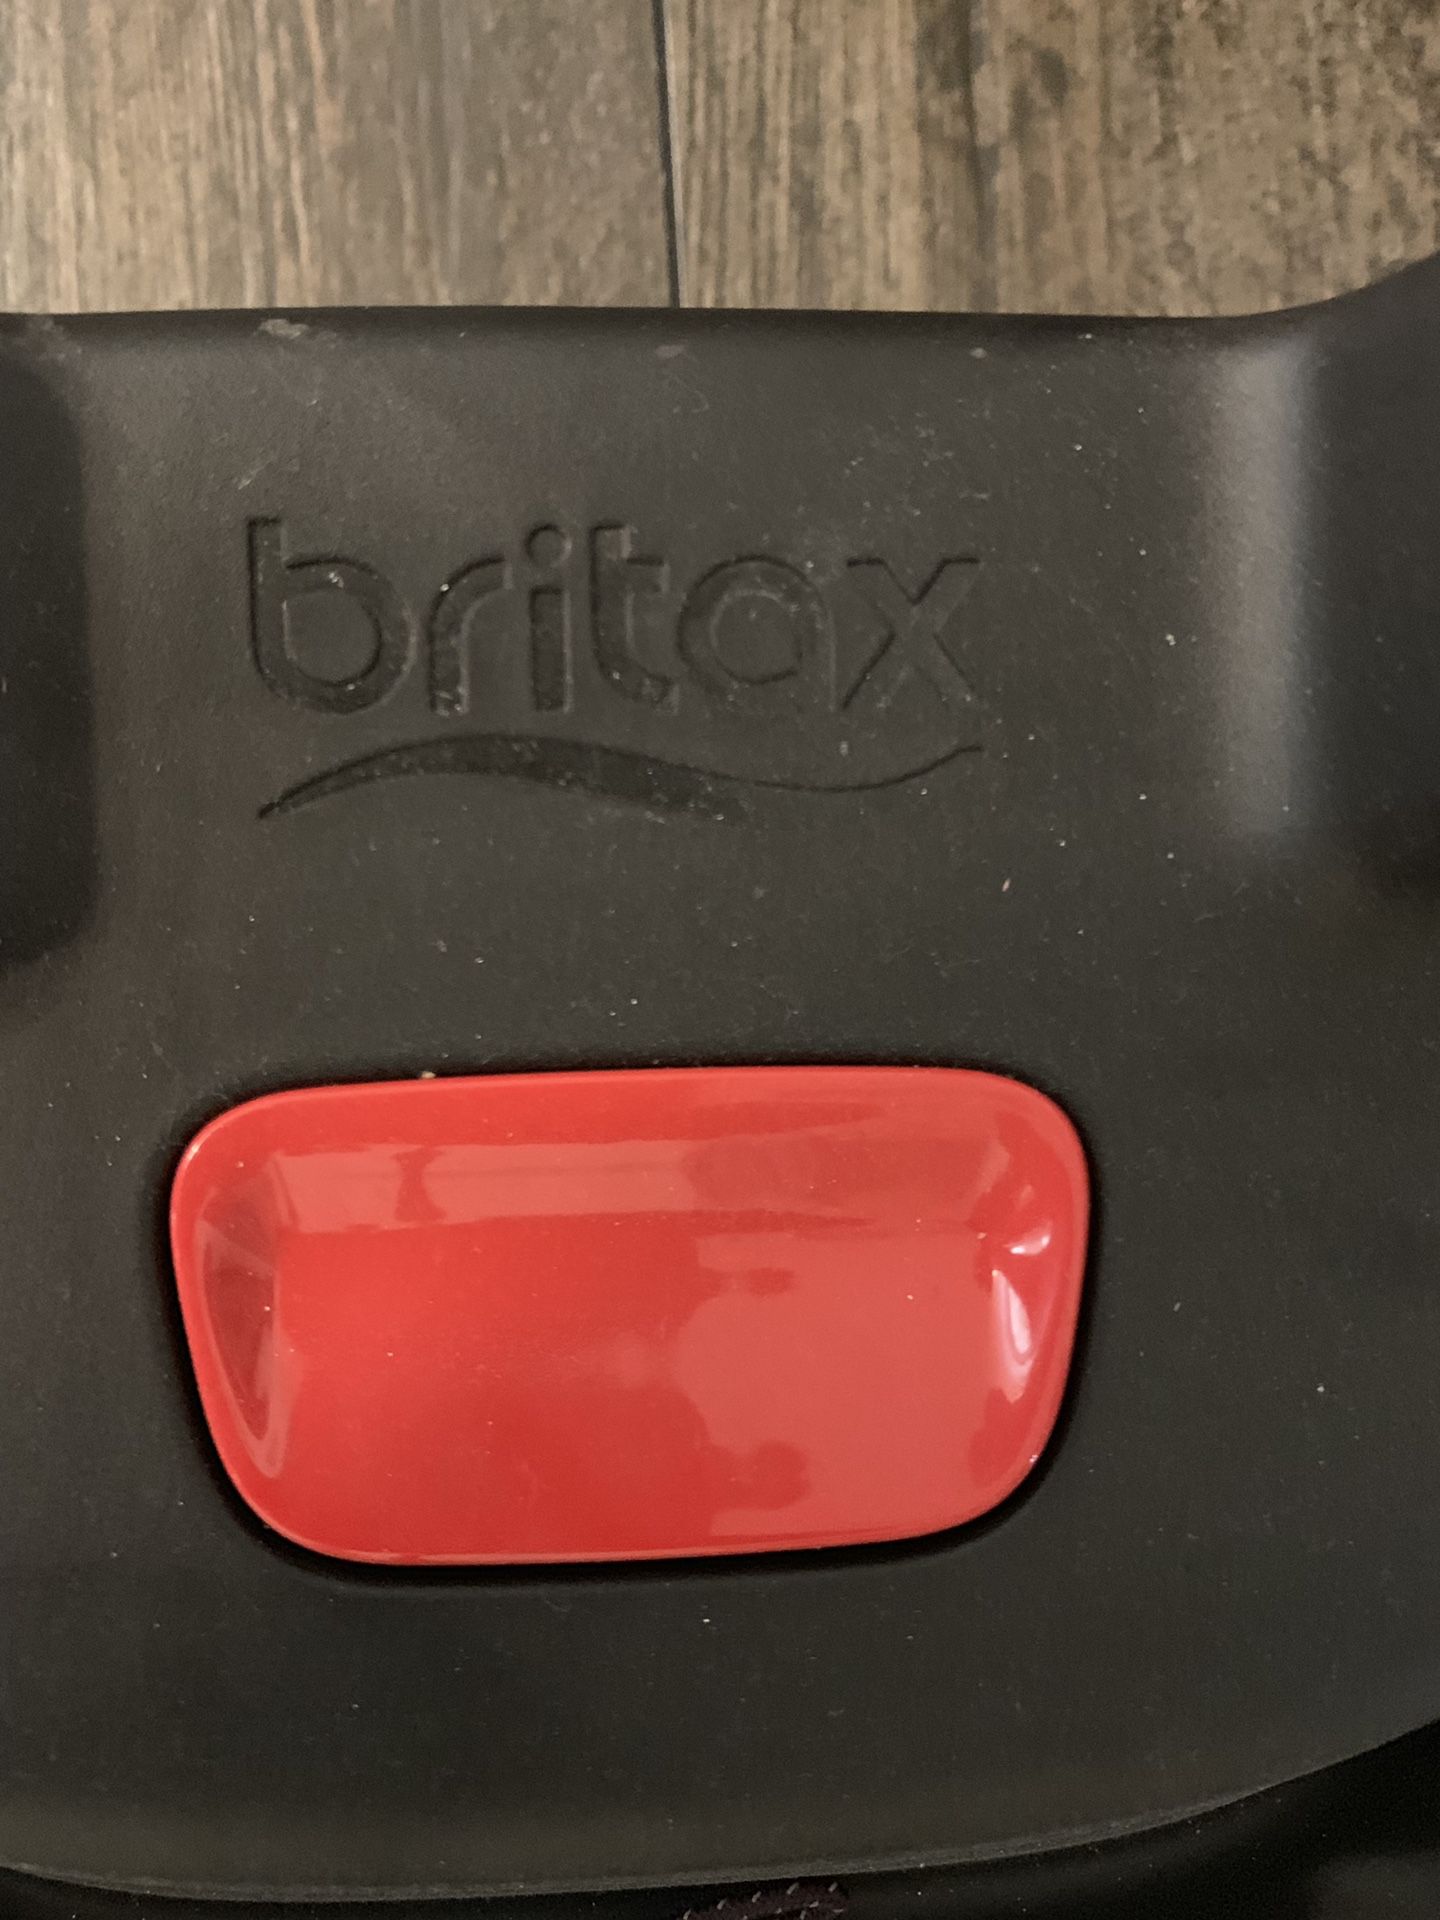 Britax base for infant car seat